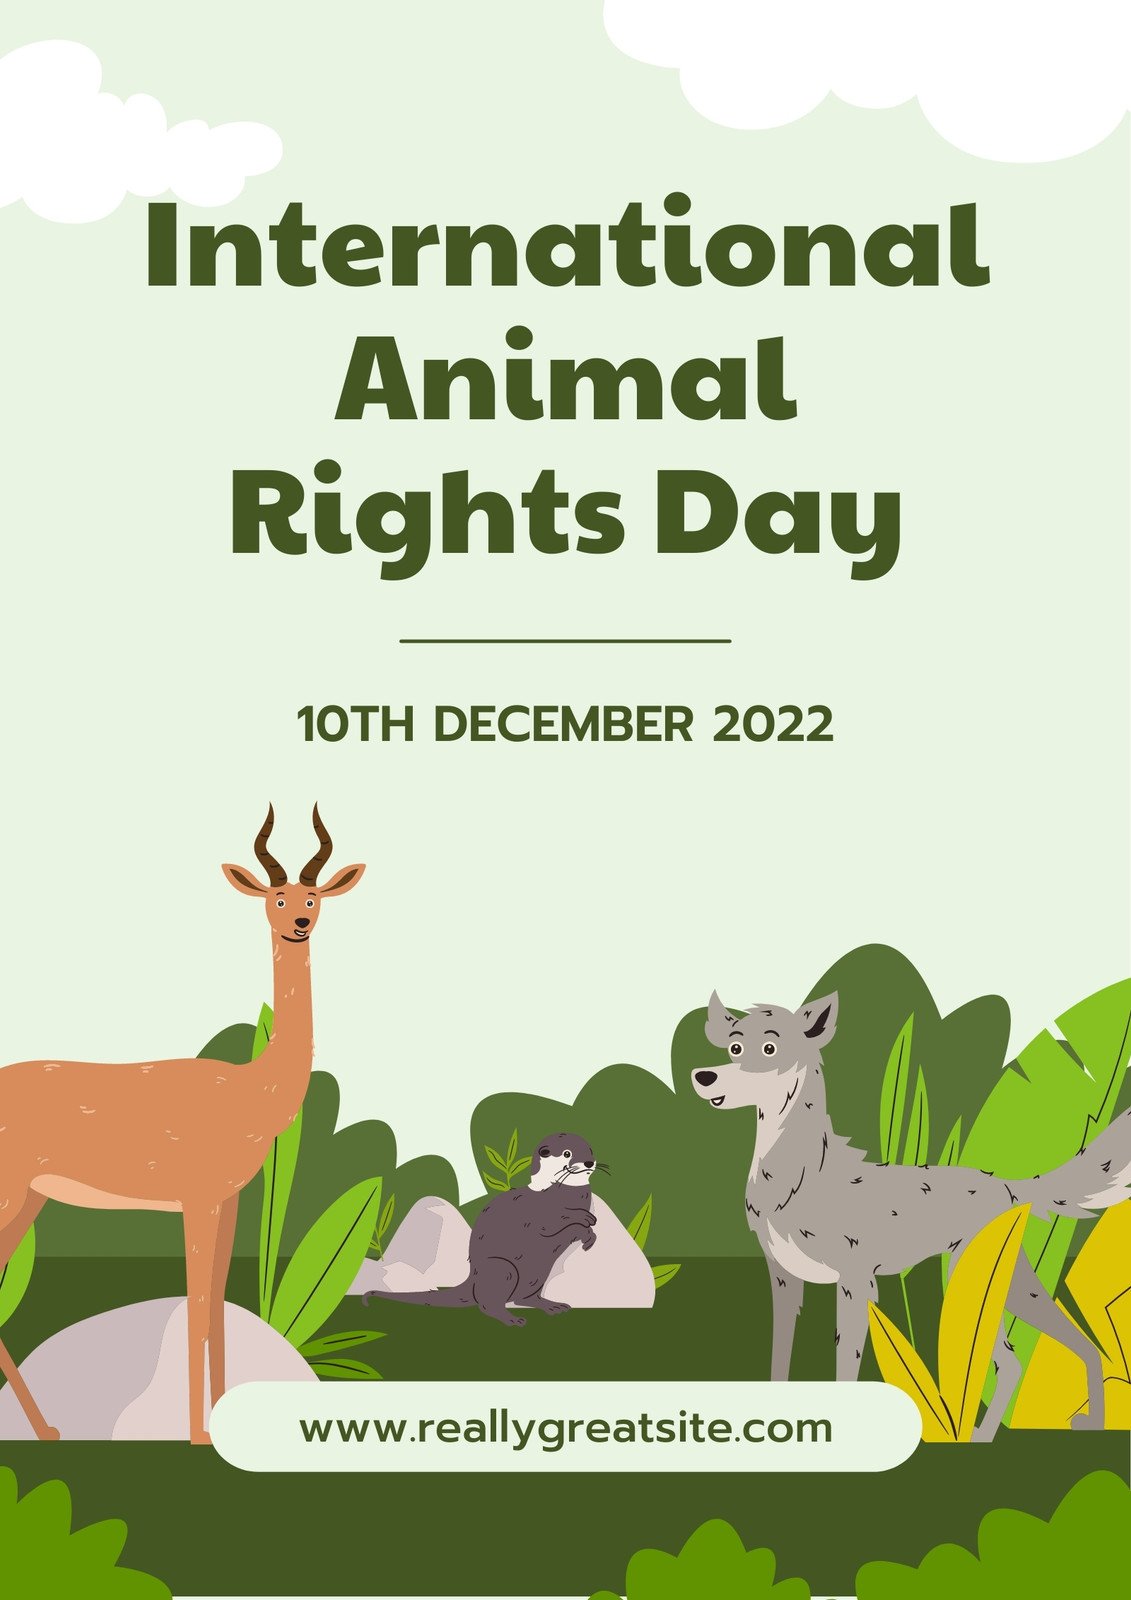 Free custom printable animal rights poster templates | Canva